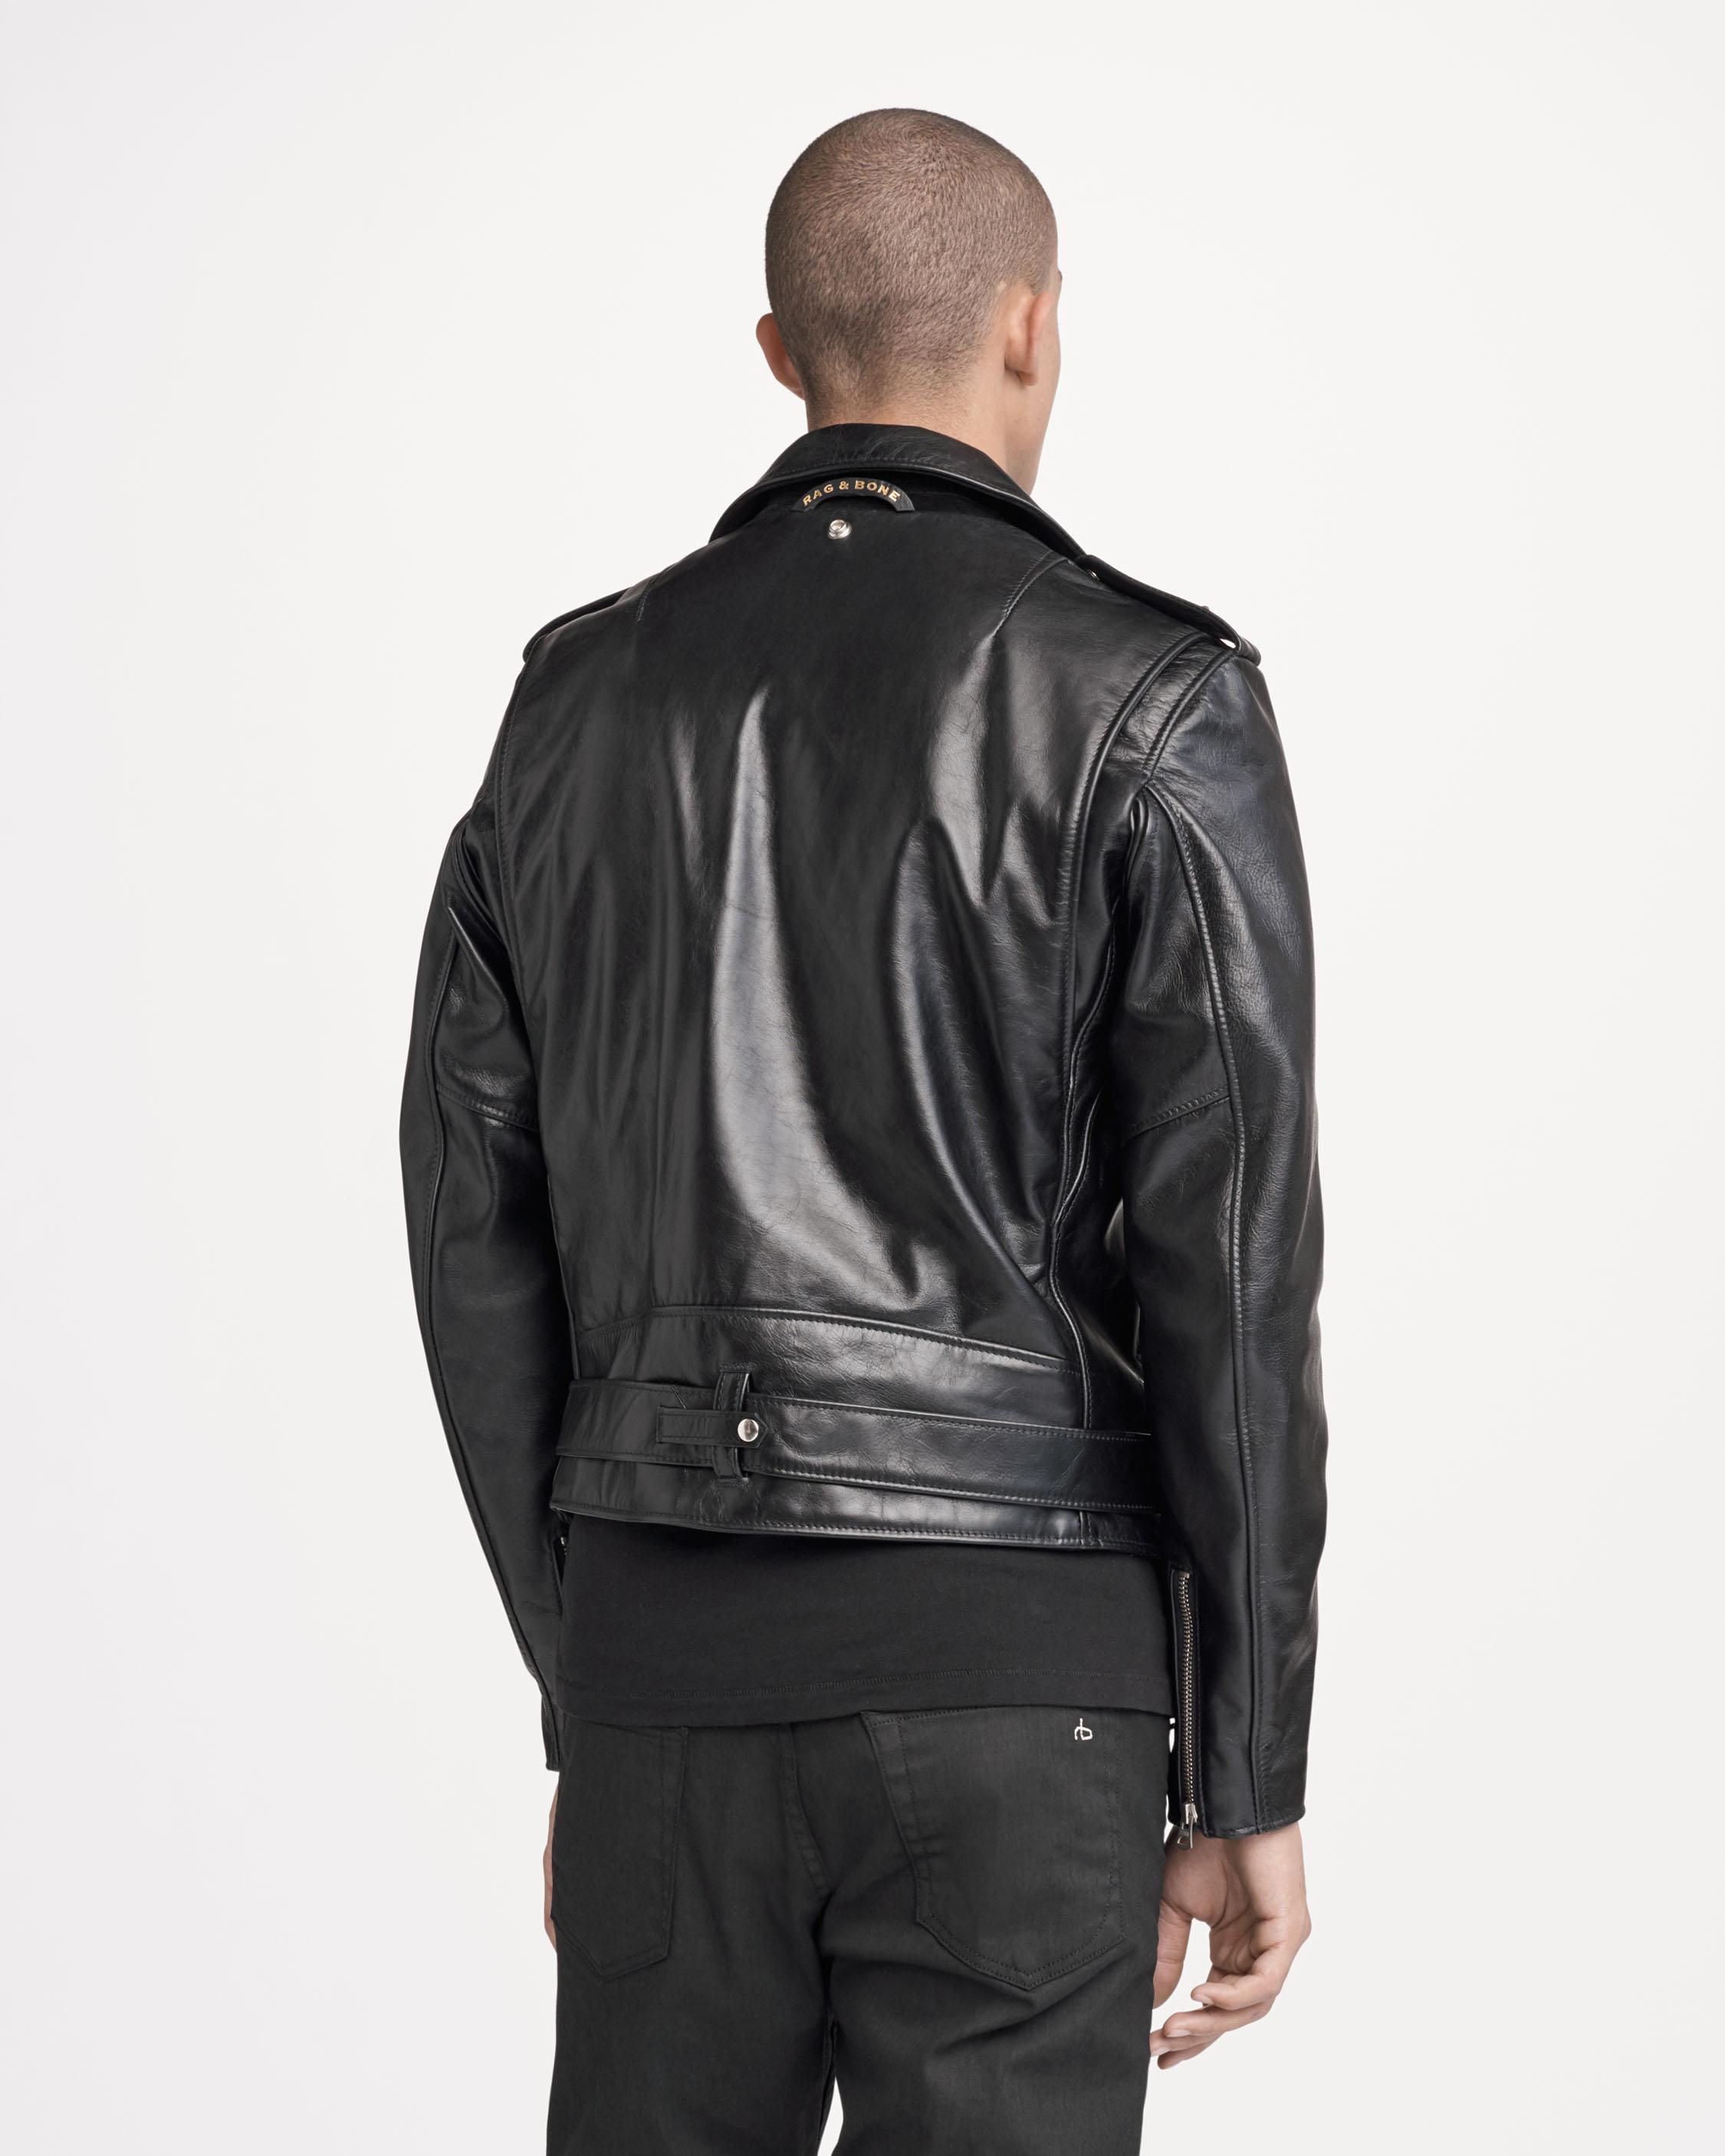 Jackets for men schott leather Schott Leather